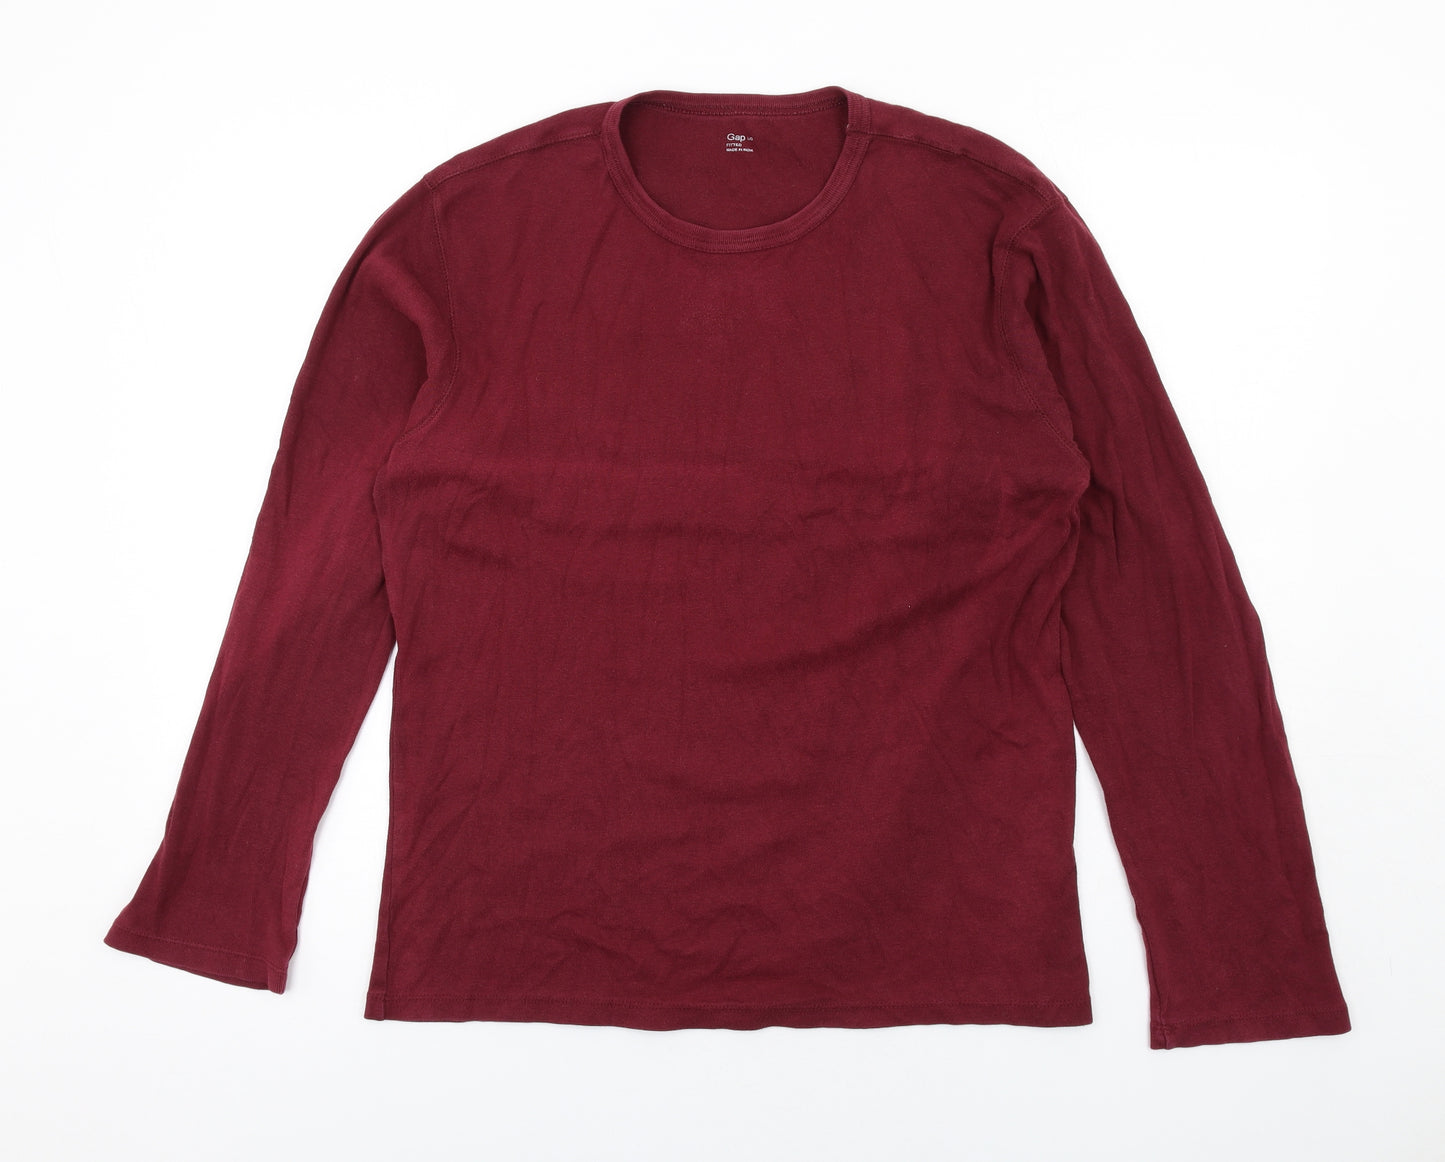 Gap Mens Red Cotton T-Shirt Size L Crew Neck